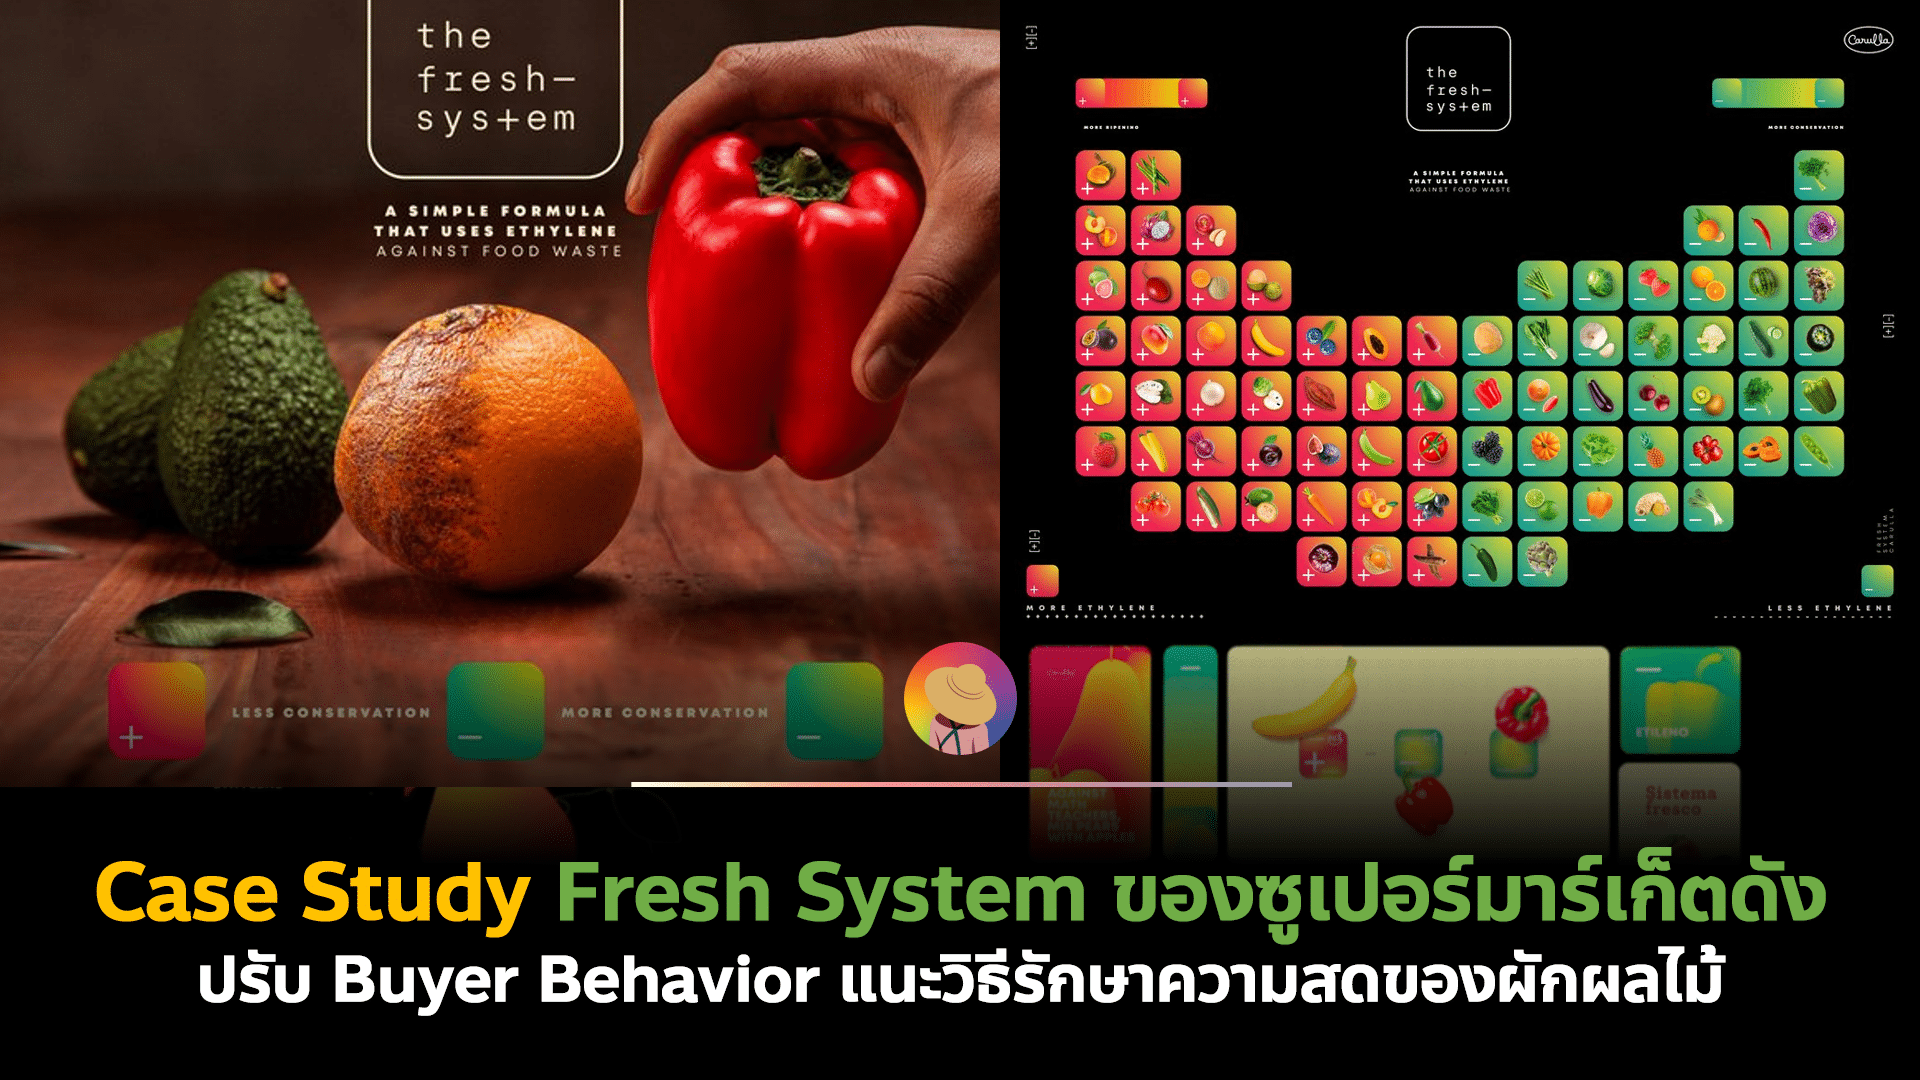 Case Study Fresh System ของซูเปอร์มาร์เก็ตดัง ปรับ Buyer Behavior แนะวิธีรักษาความสดของผักผลไม้